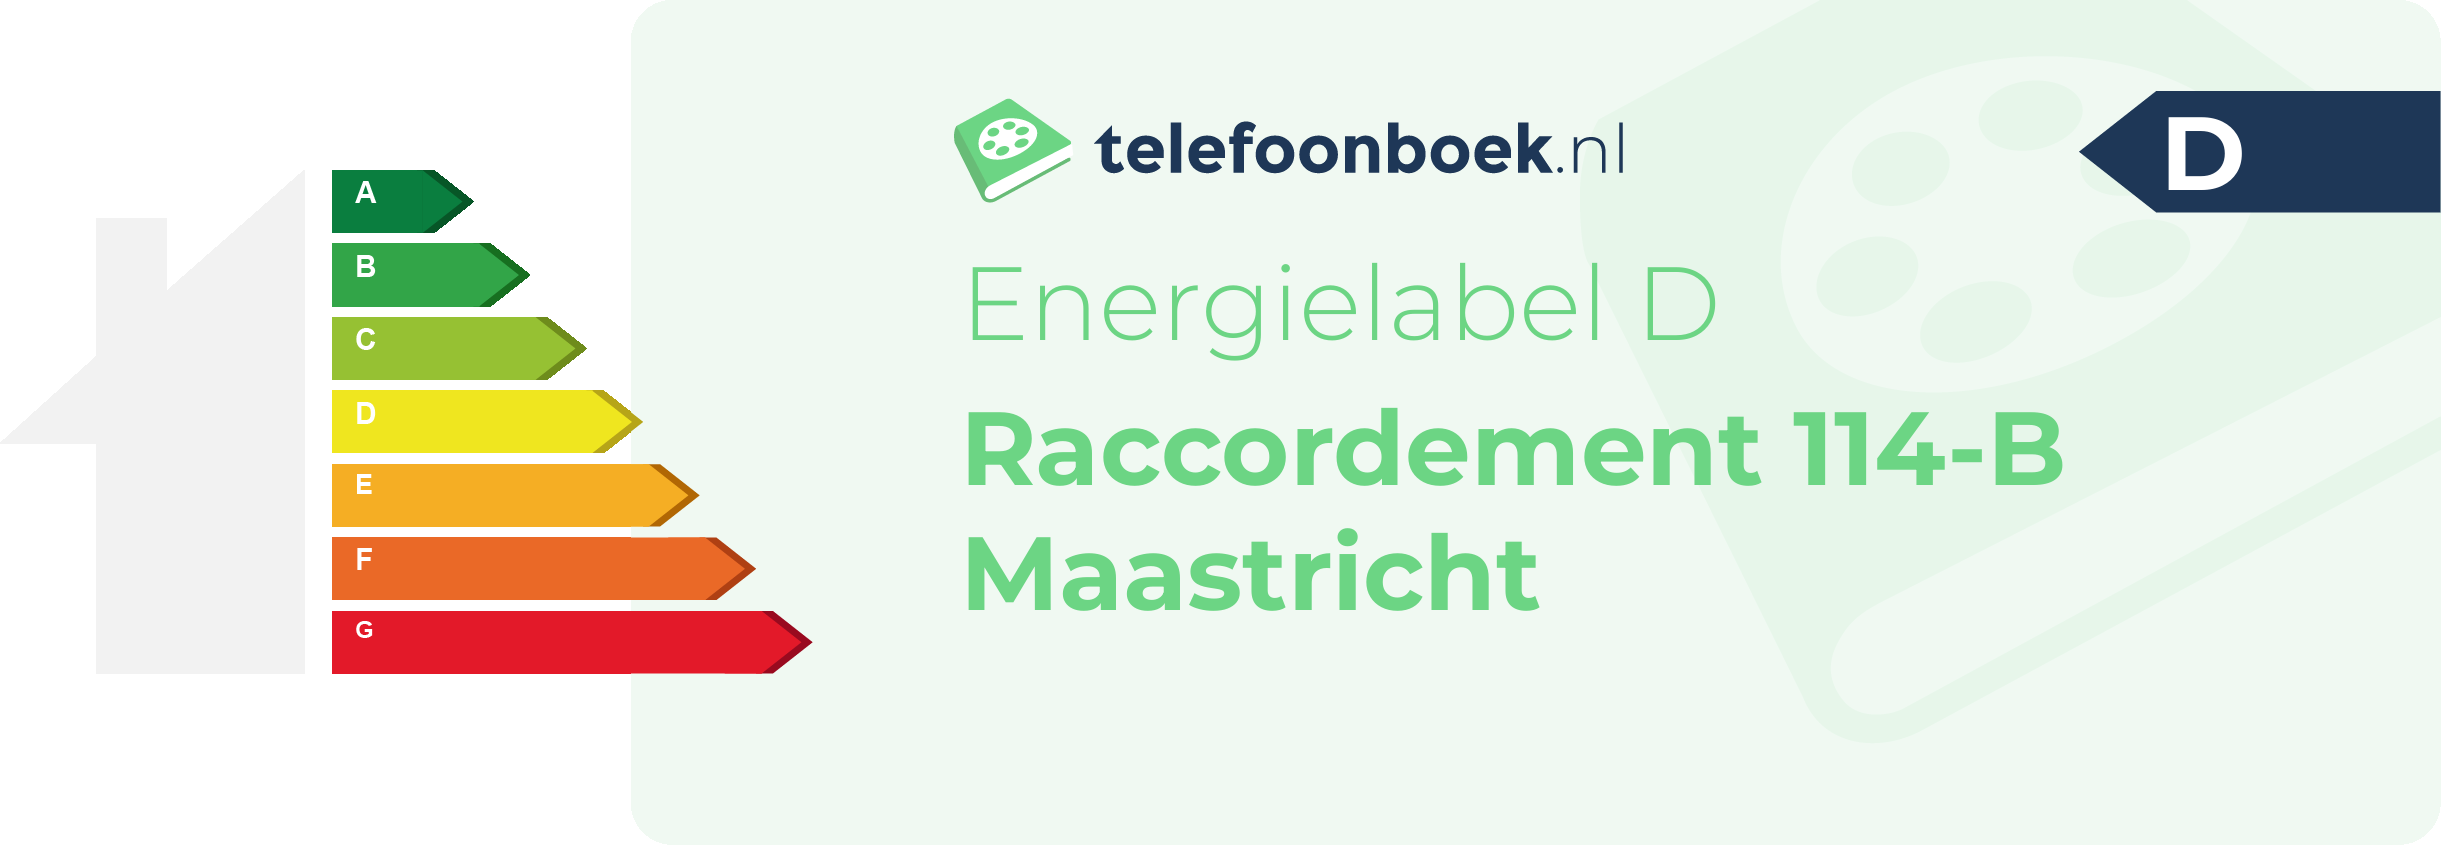 Energielabel Raccordement 114-B Maastricht